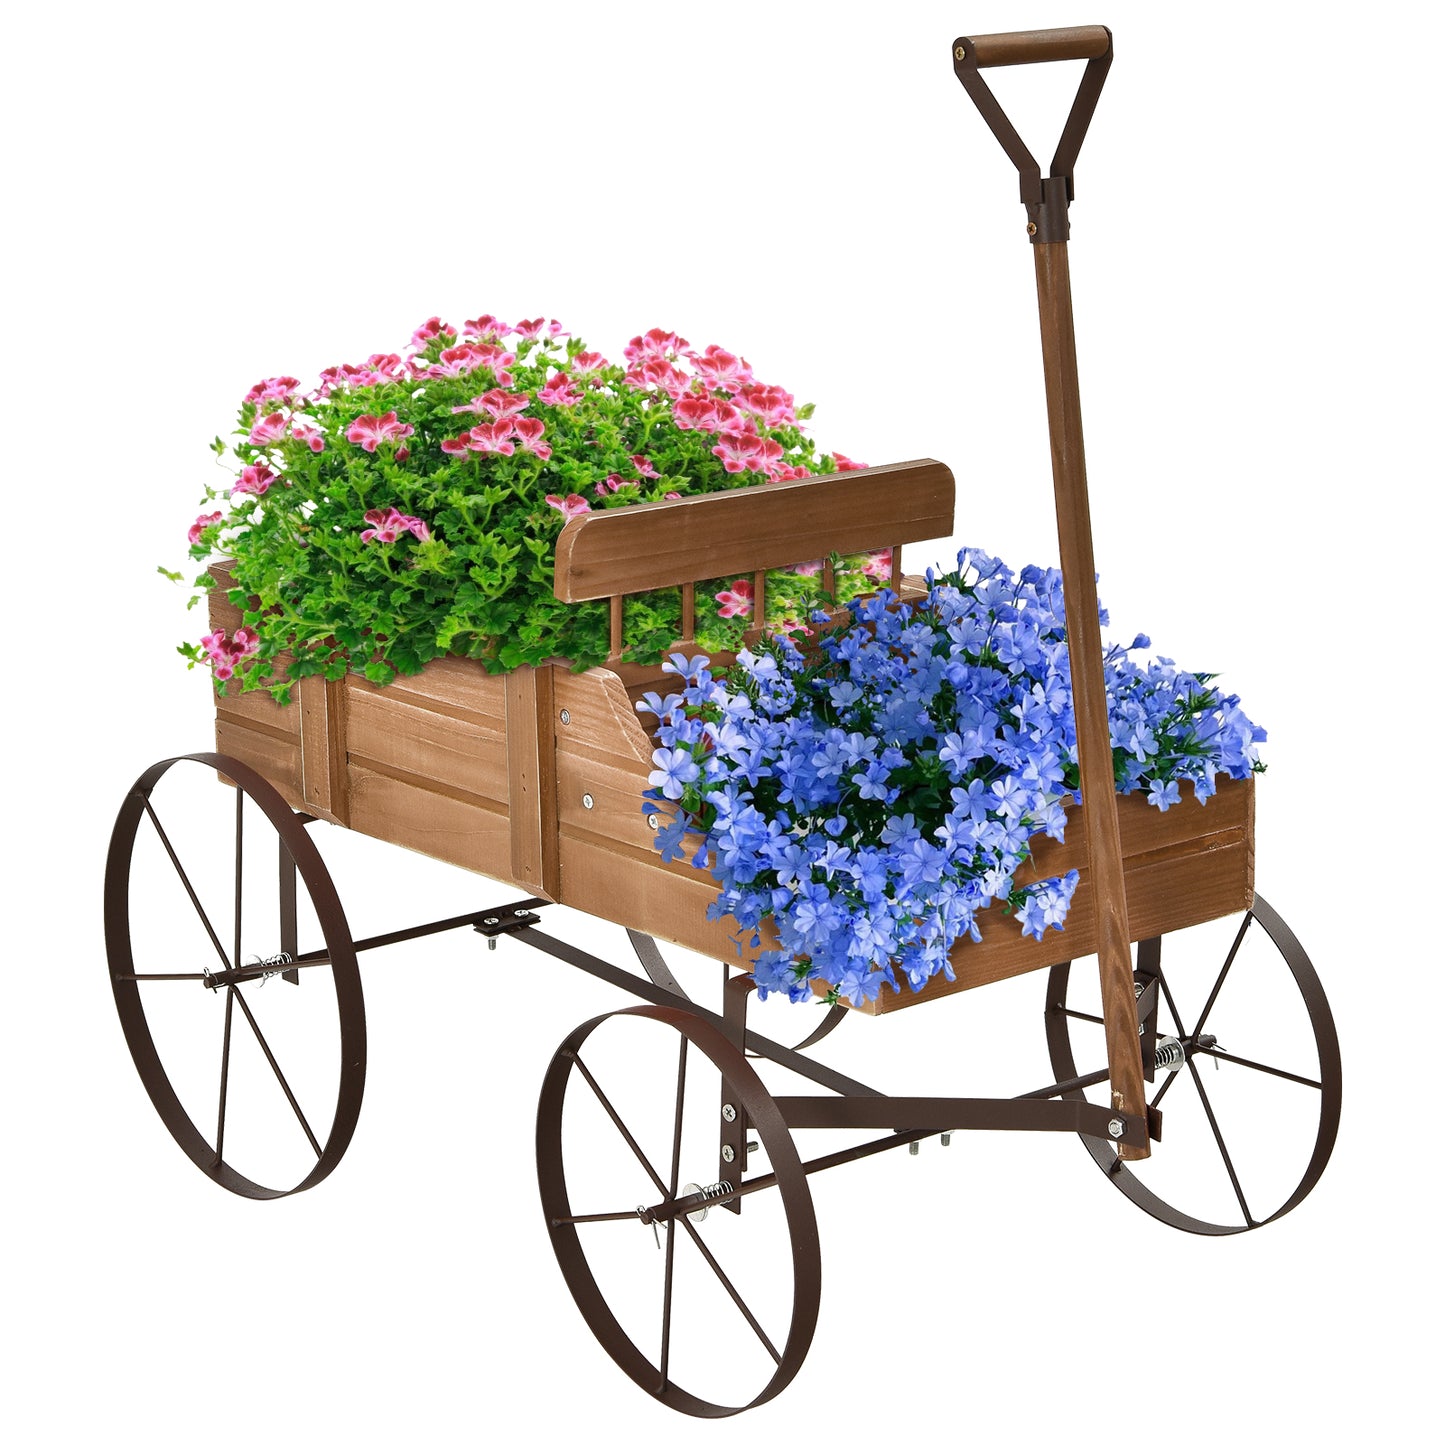 Flower Planter - Wooden Planter Box With Wheel